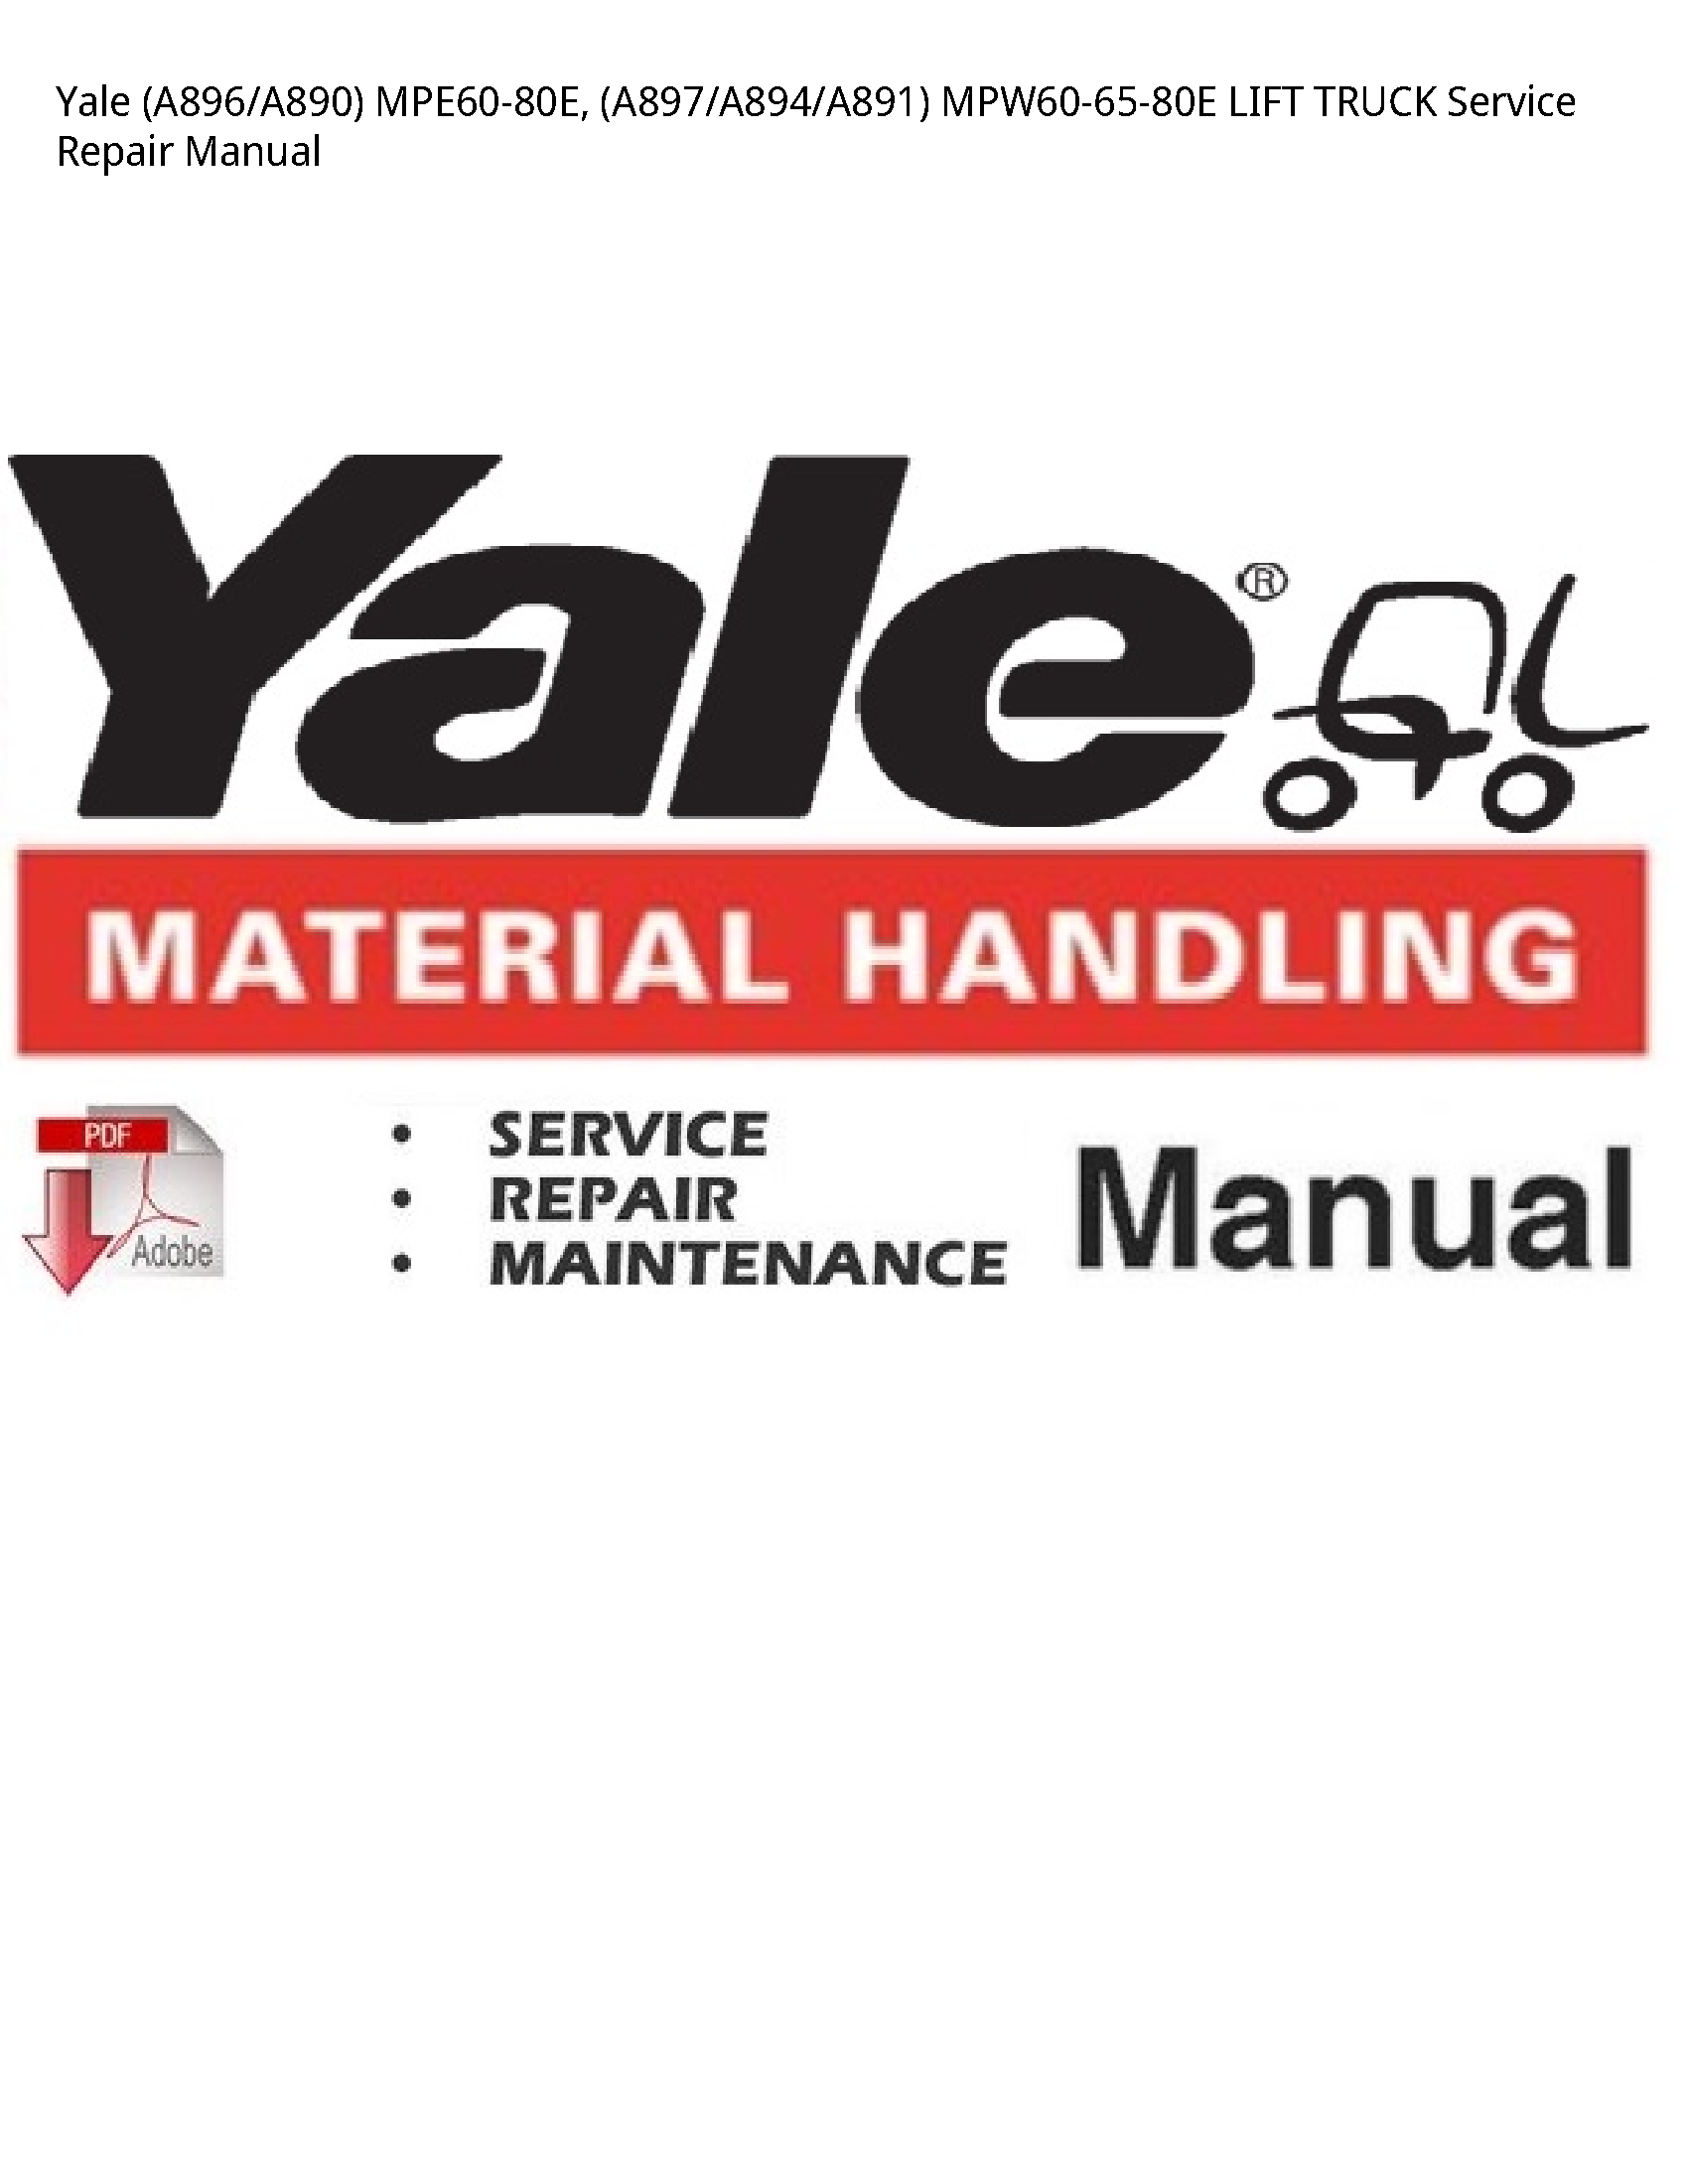 Yale (A896 LIFT TRUCK manual